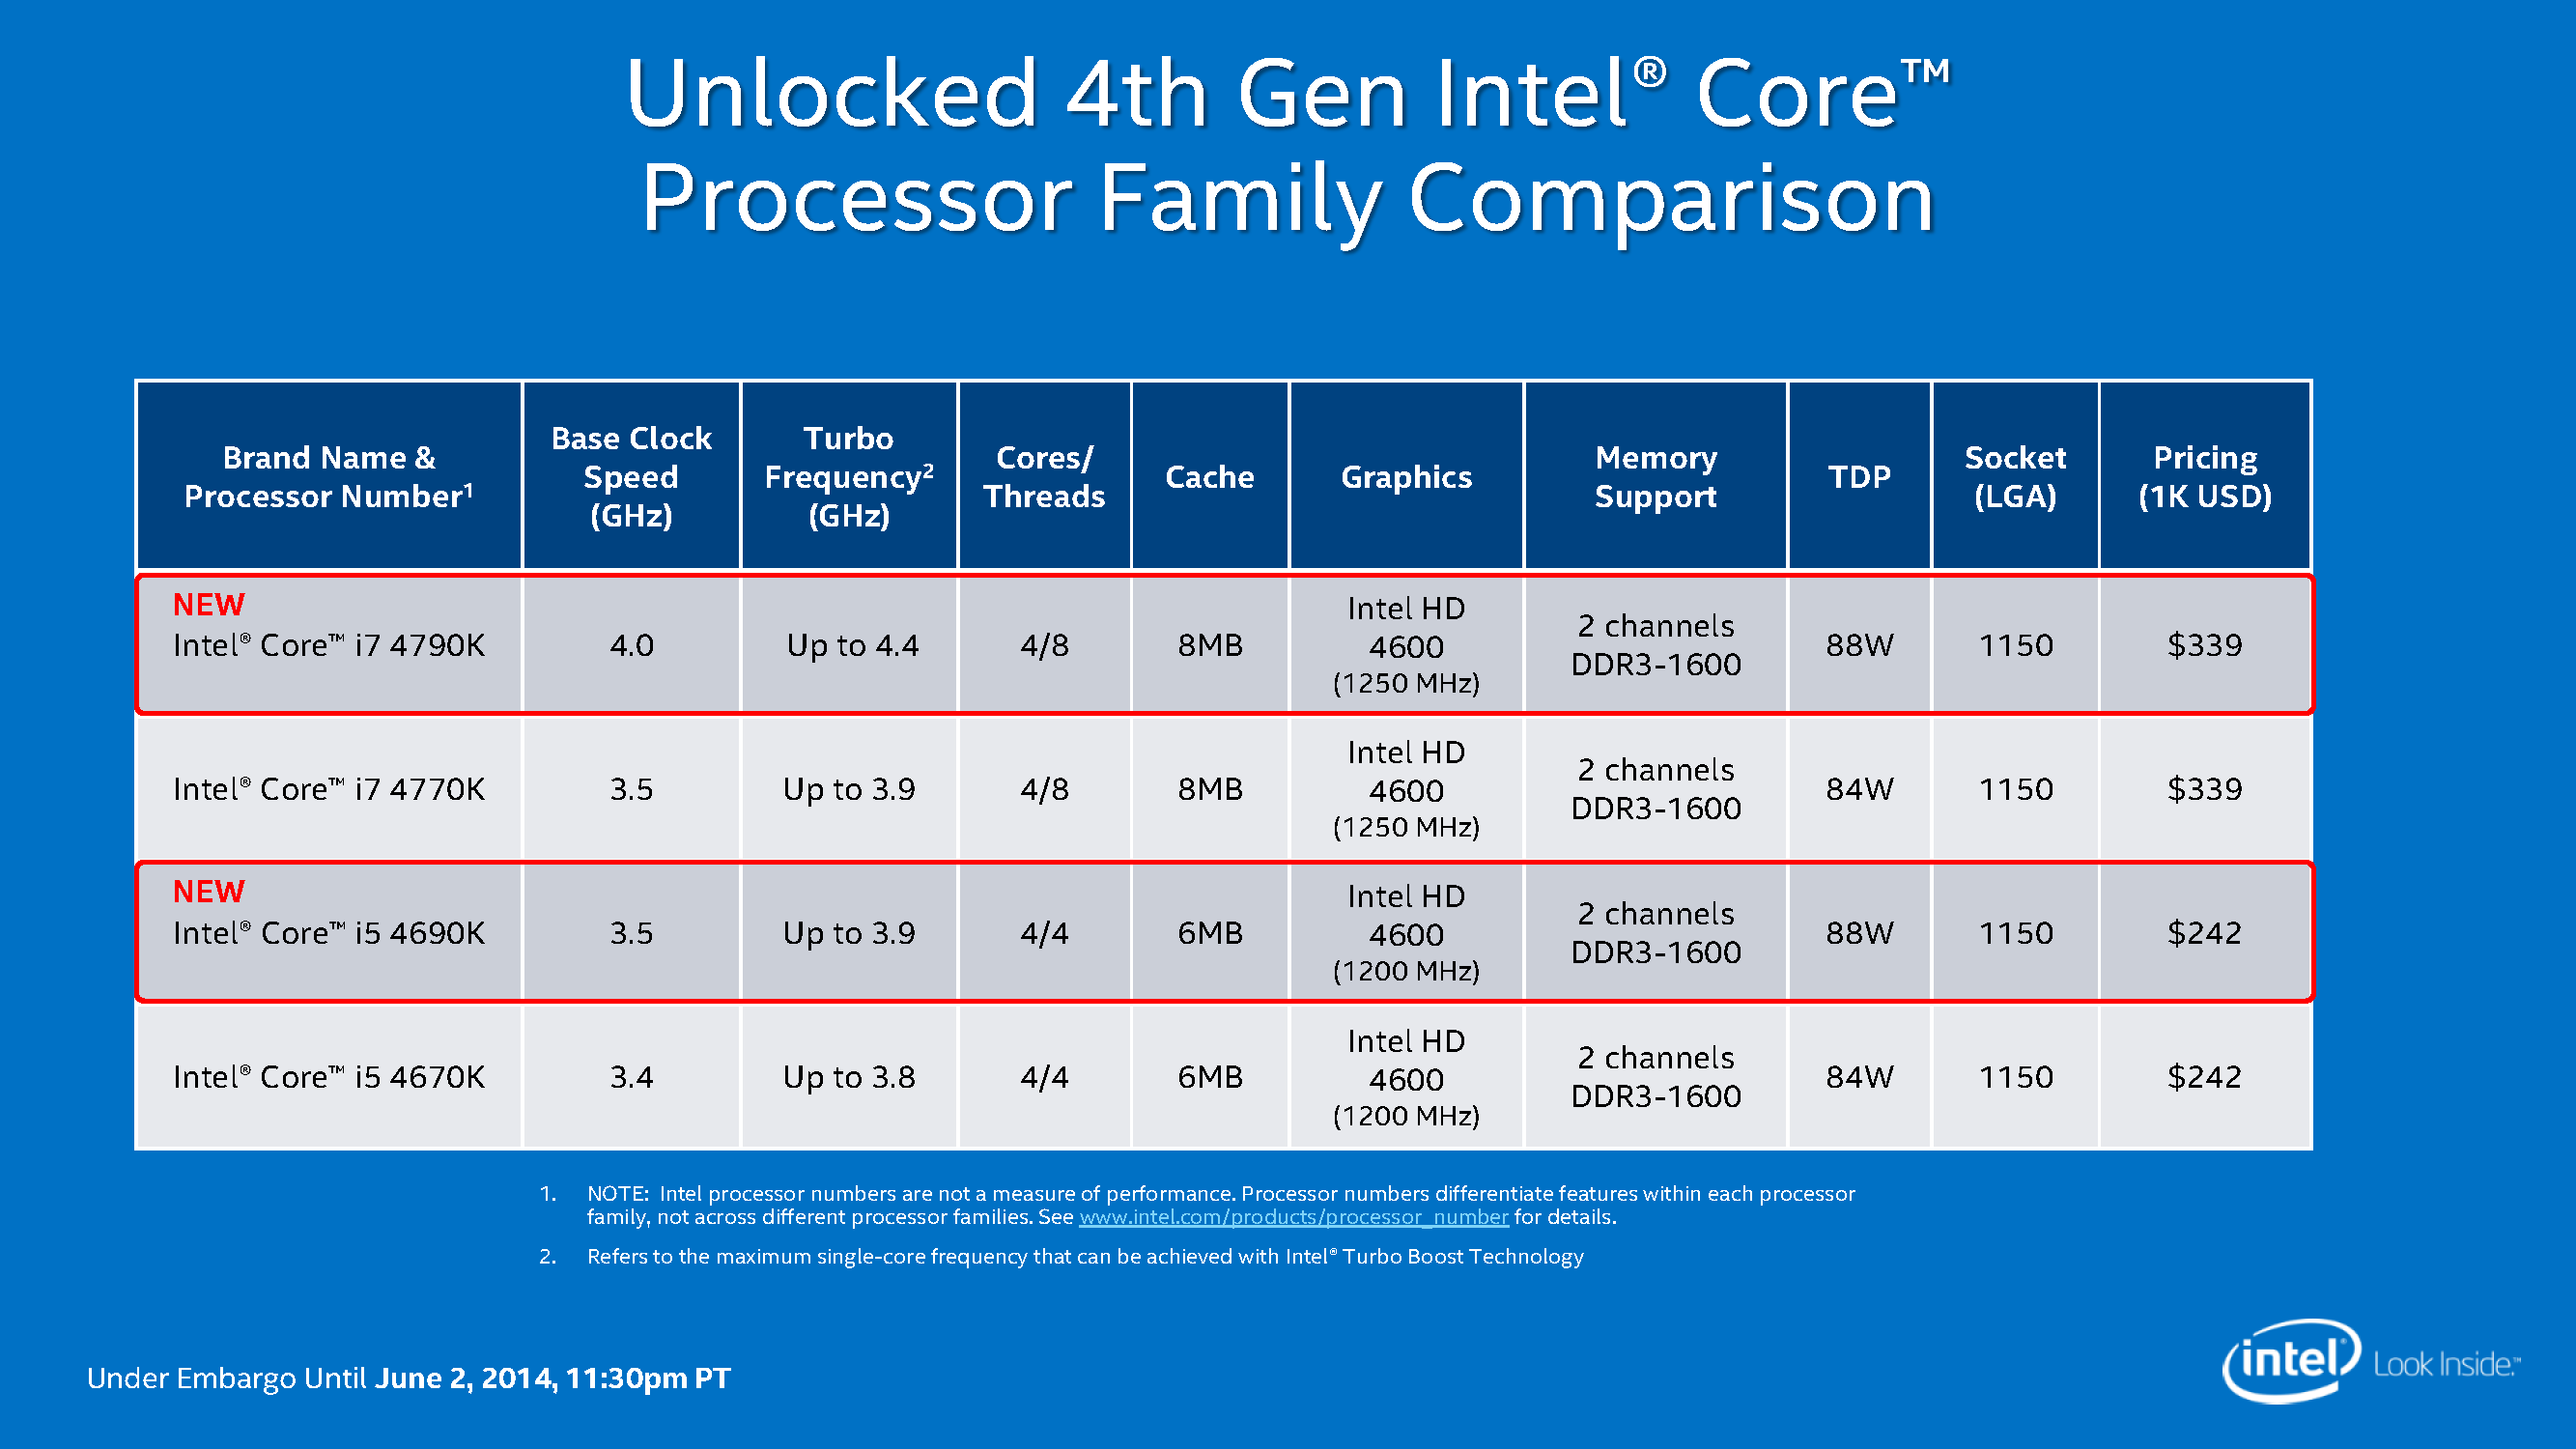 Intel core i7 частота